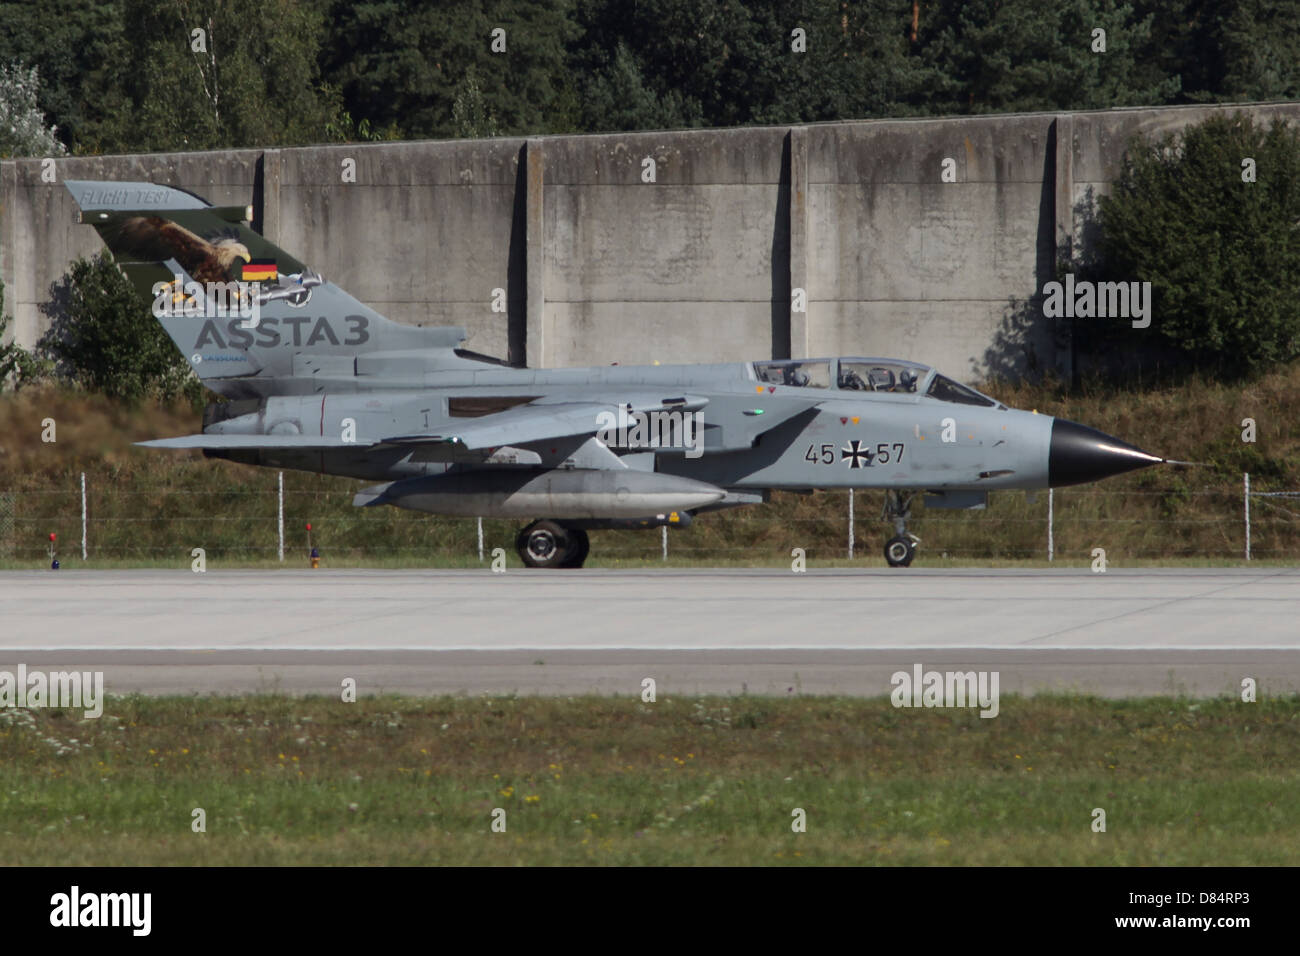 German Air Force Tornado ASSTA collaudo di aerei enhanced armi come il piccolo diametro bomba, Manching Air Base, Germania. Foto Stock